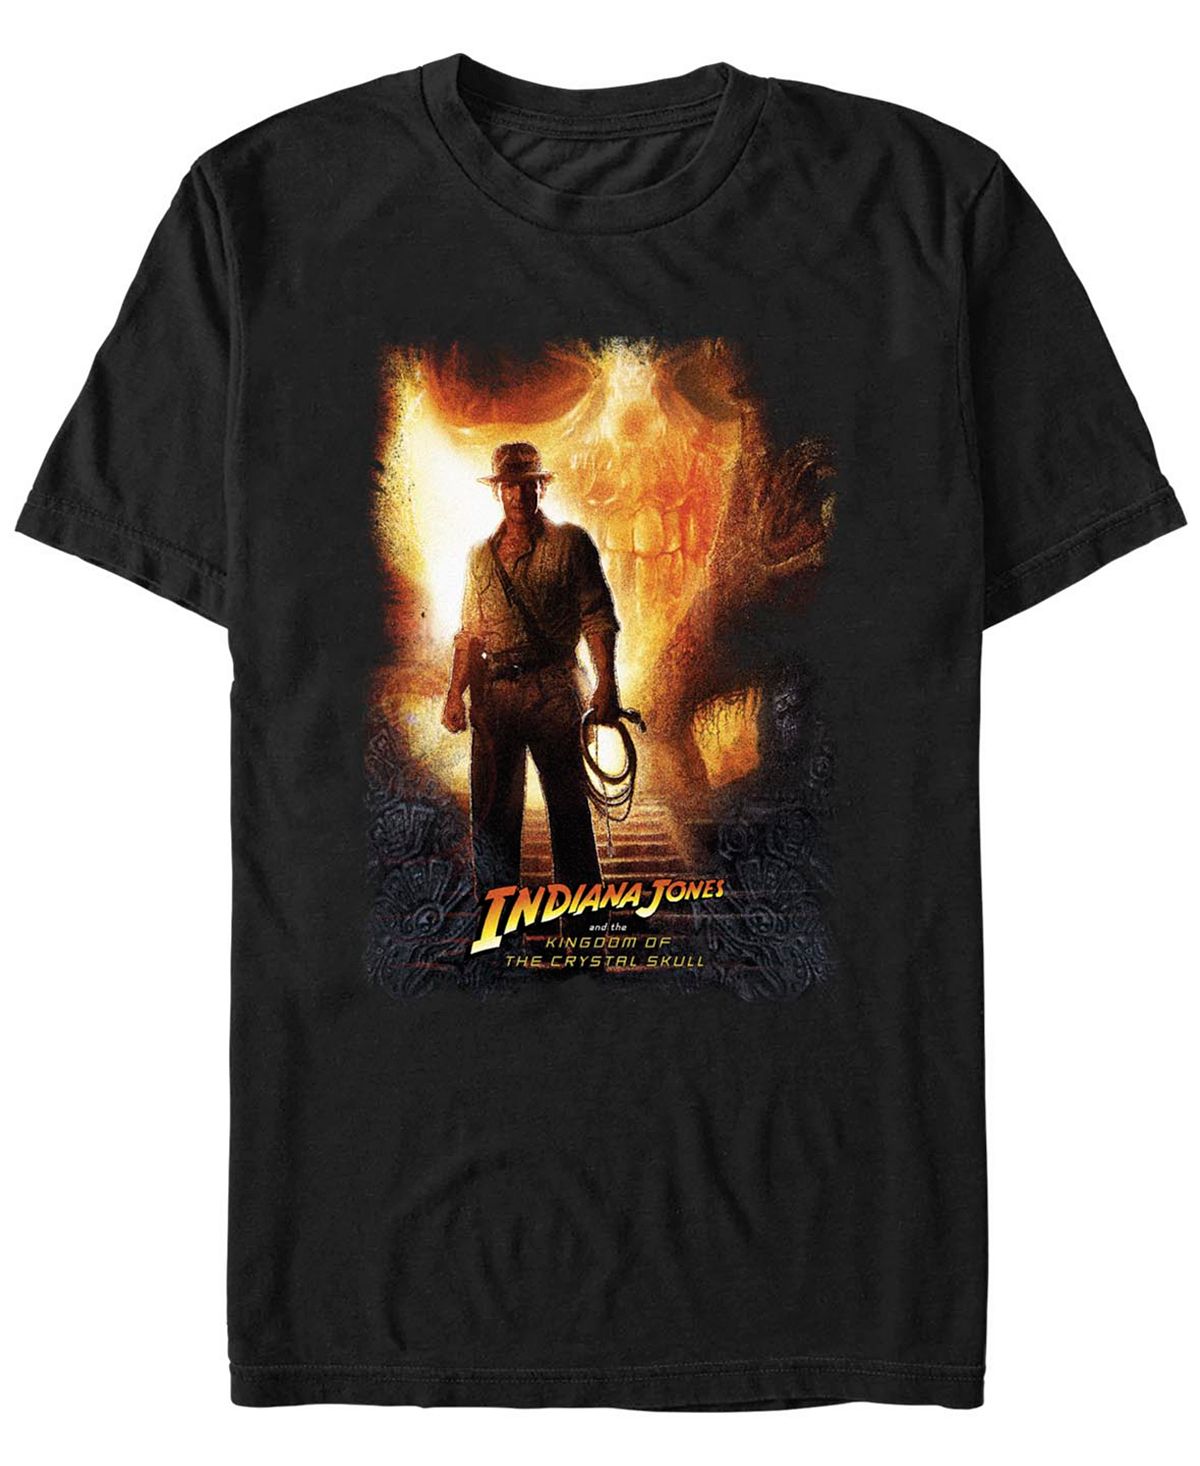 Мужская футболка с короткими рукавами и плакатом Burnt Edge Fifth Sun